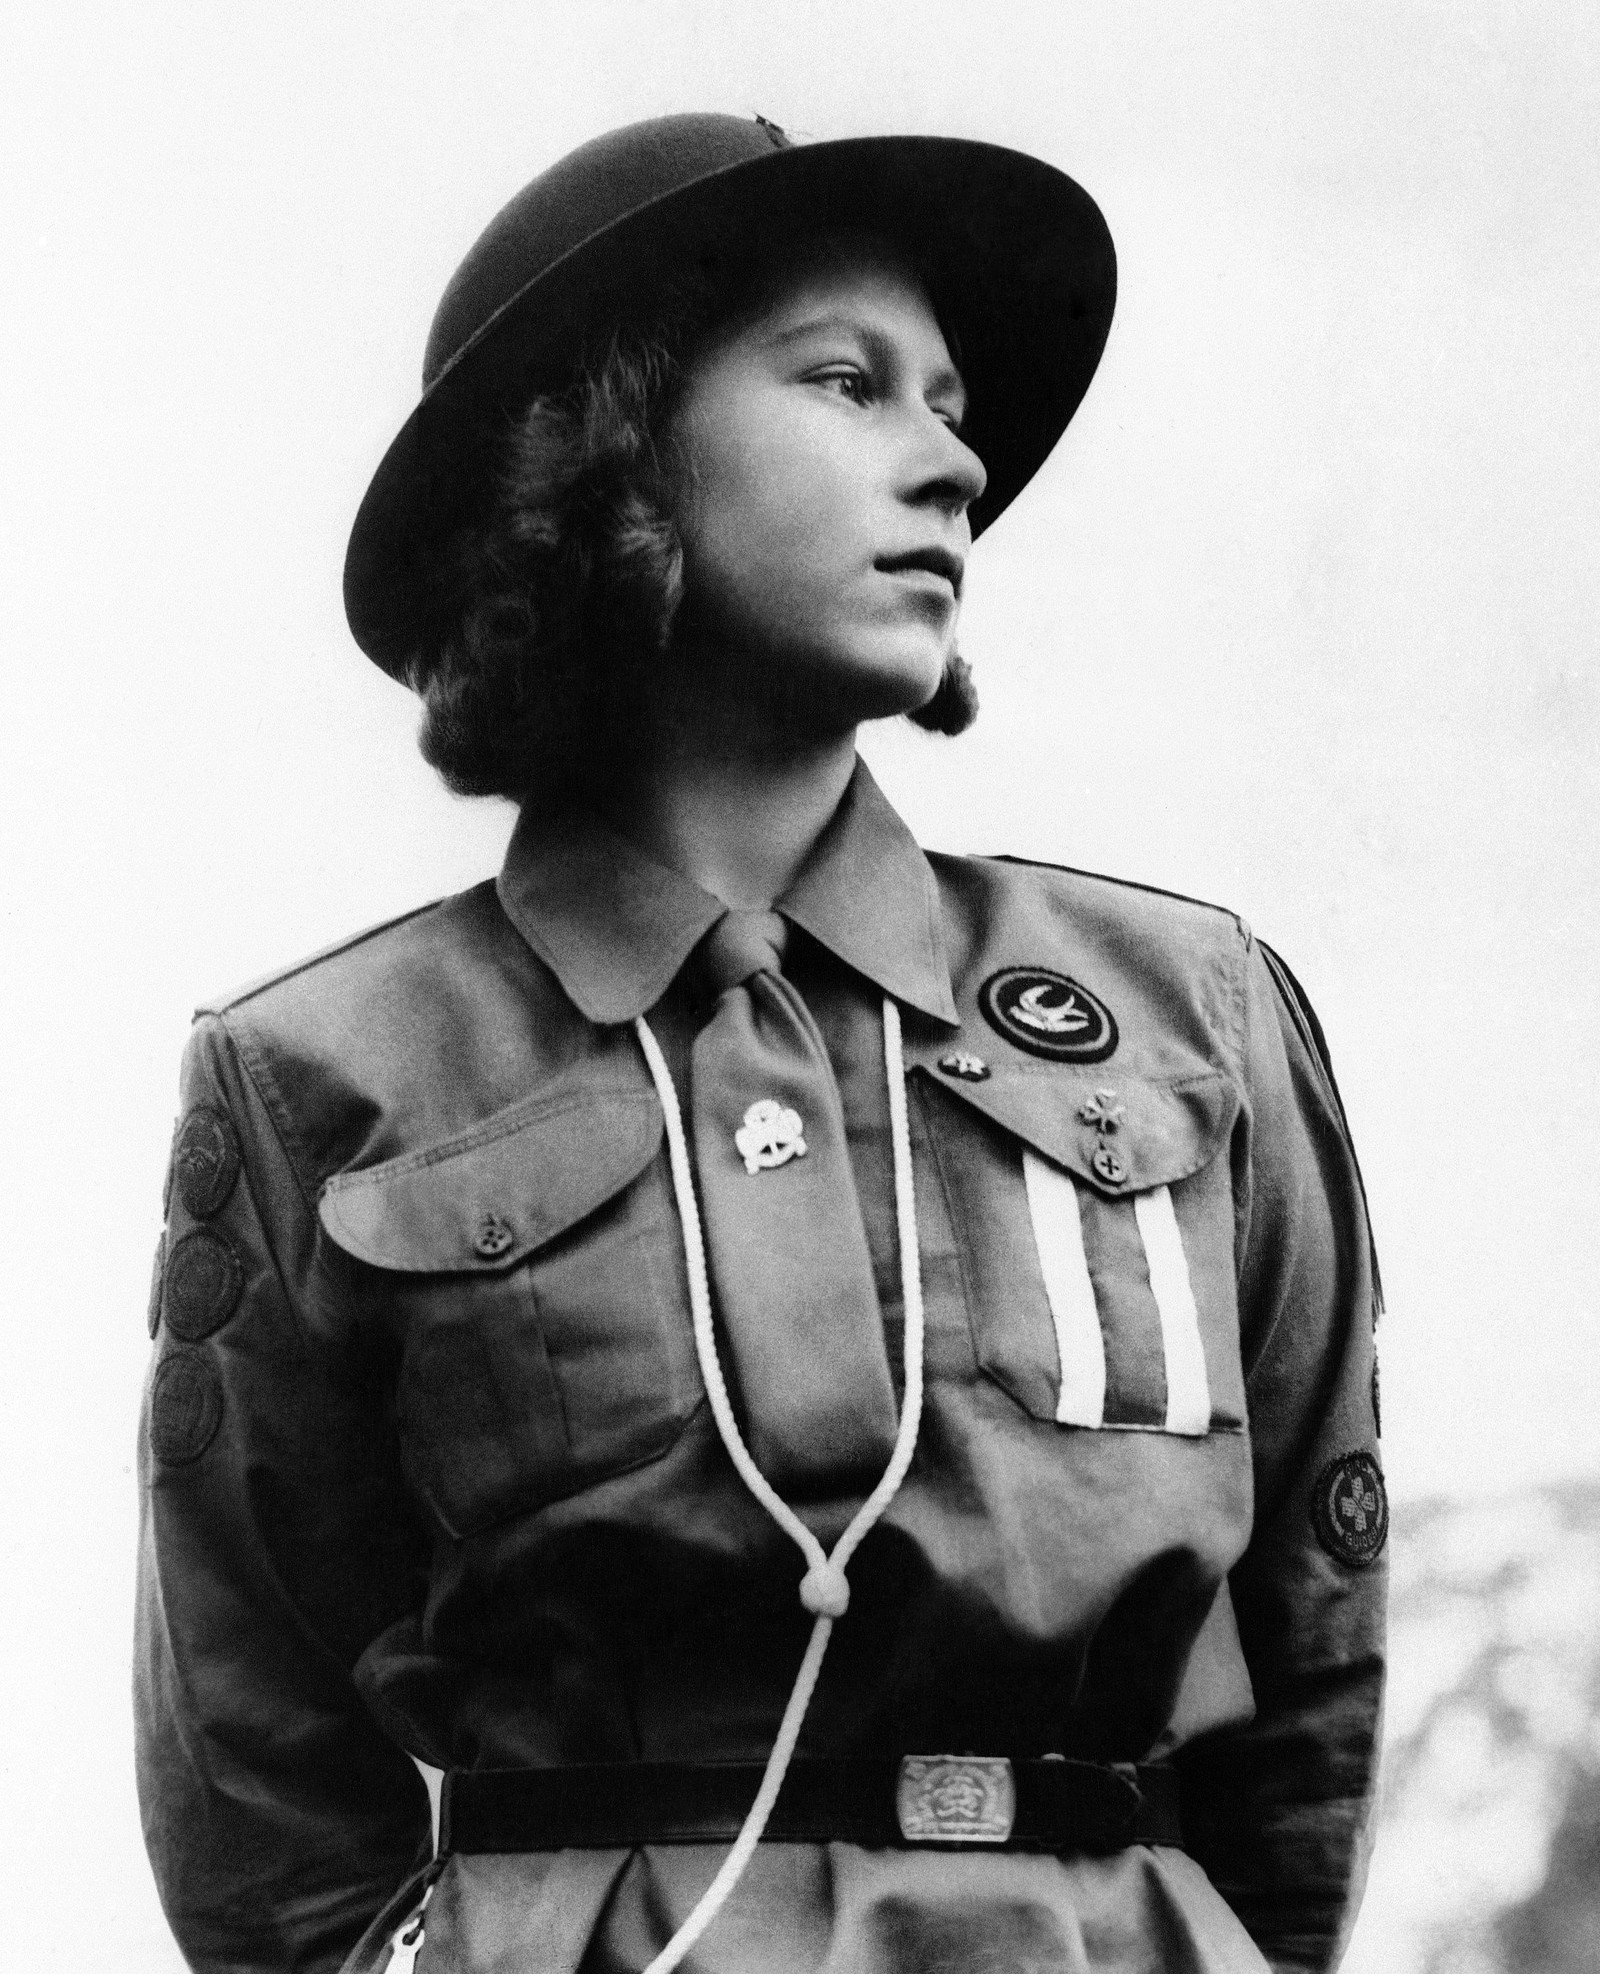 A princesa Elizabeth posa em uniforme militar em 1943. — Foto: AP Photo, File